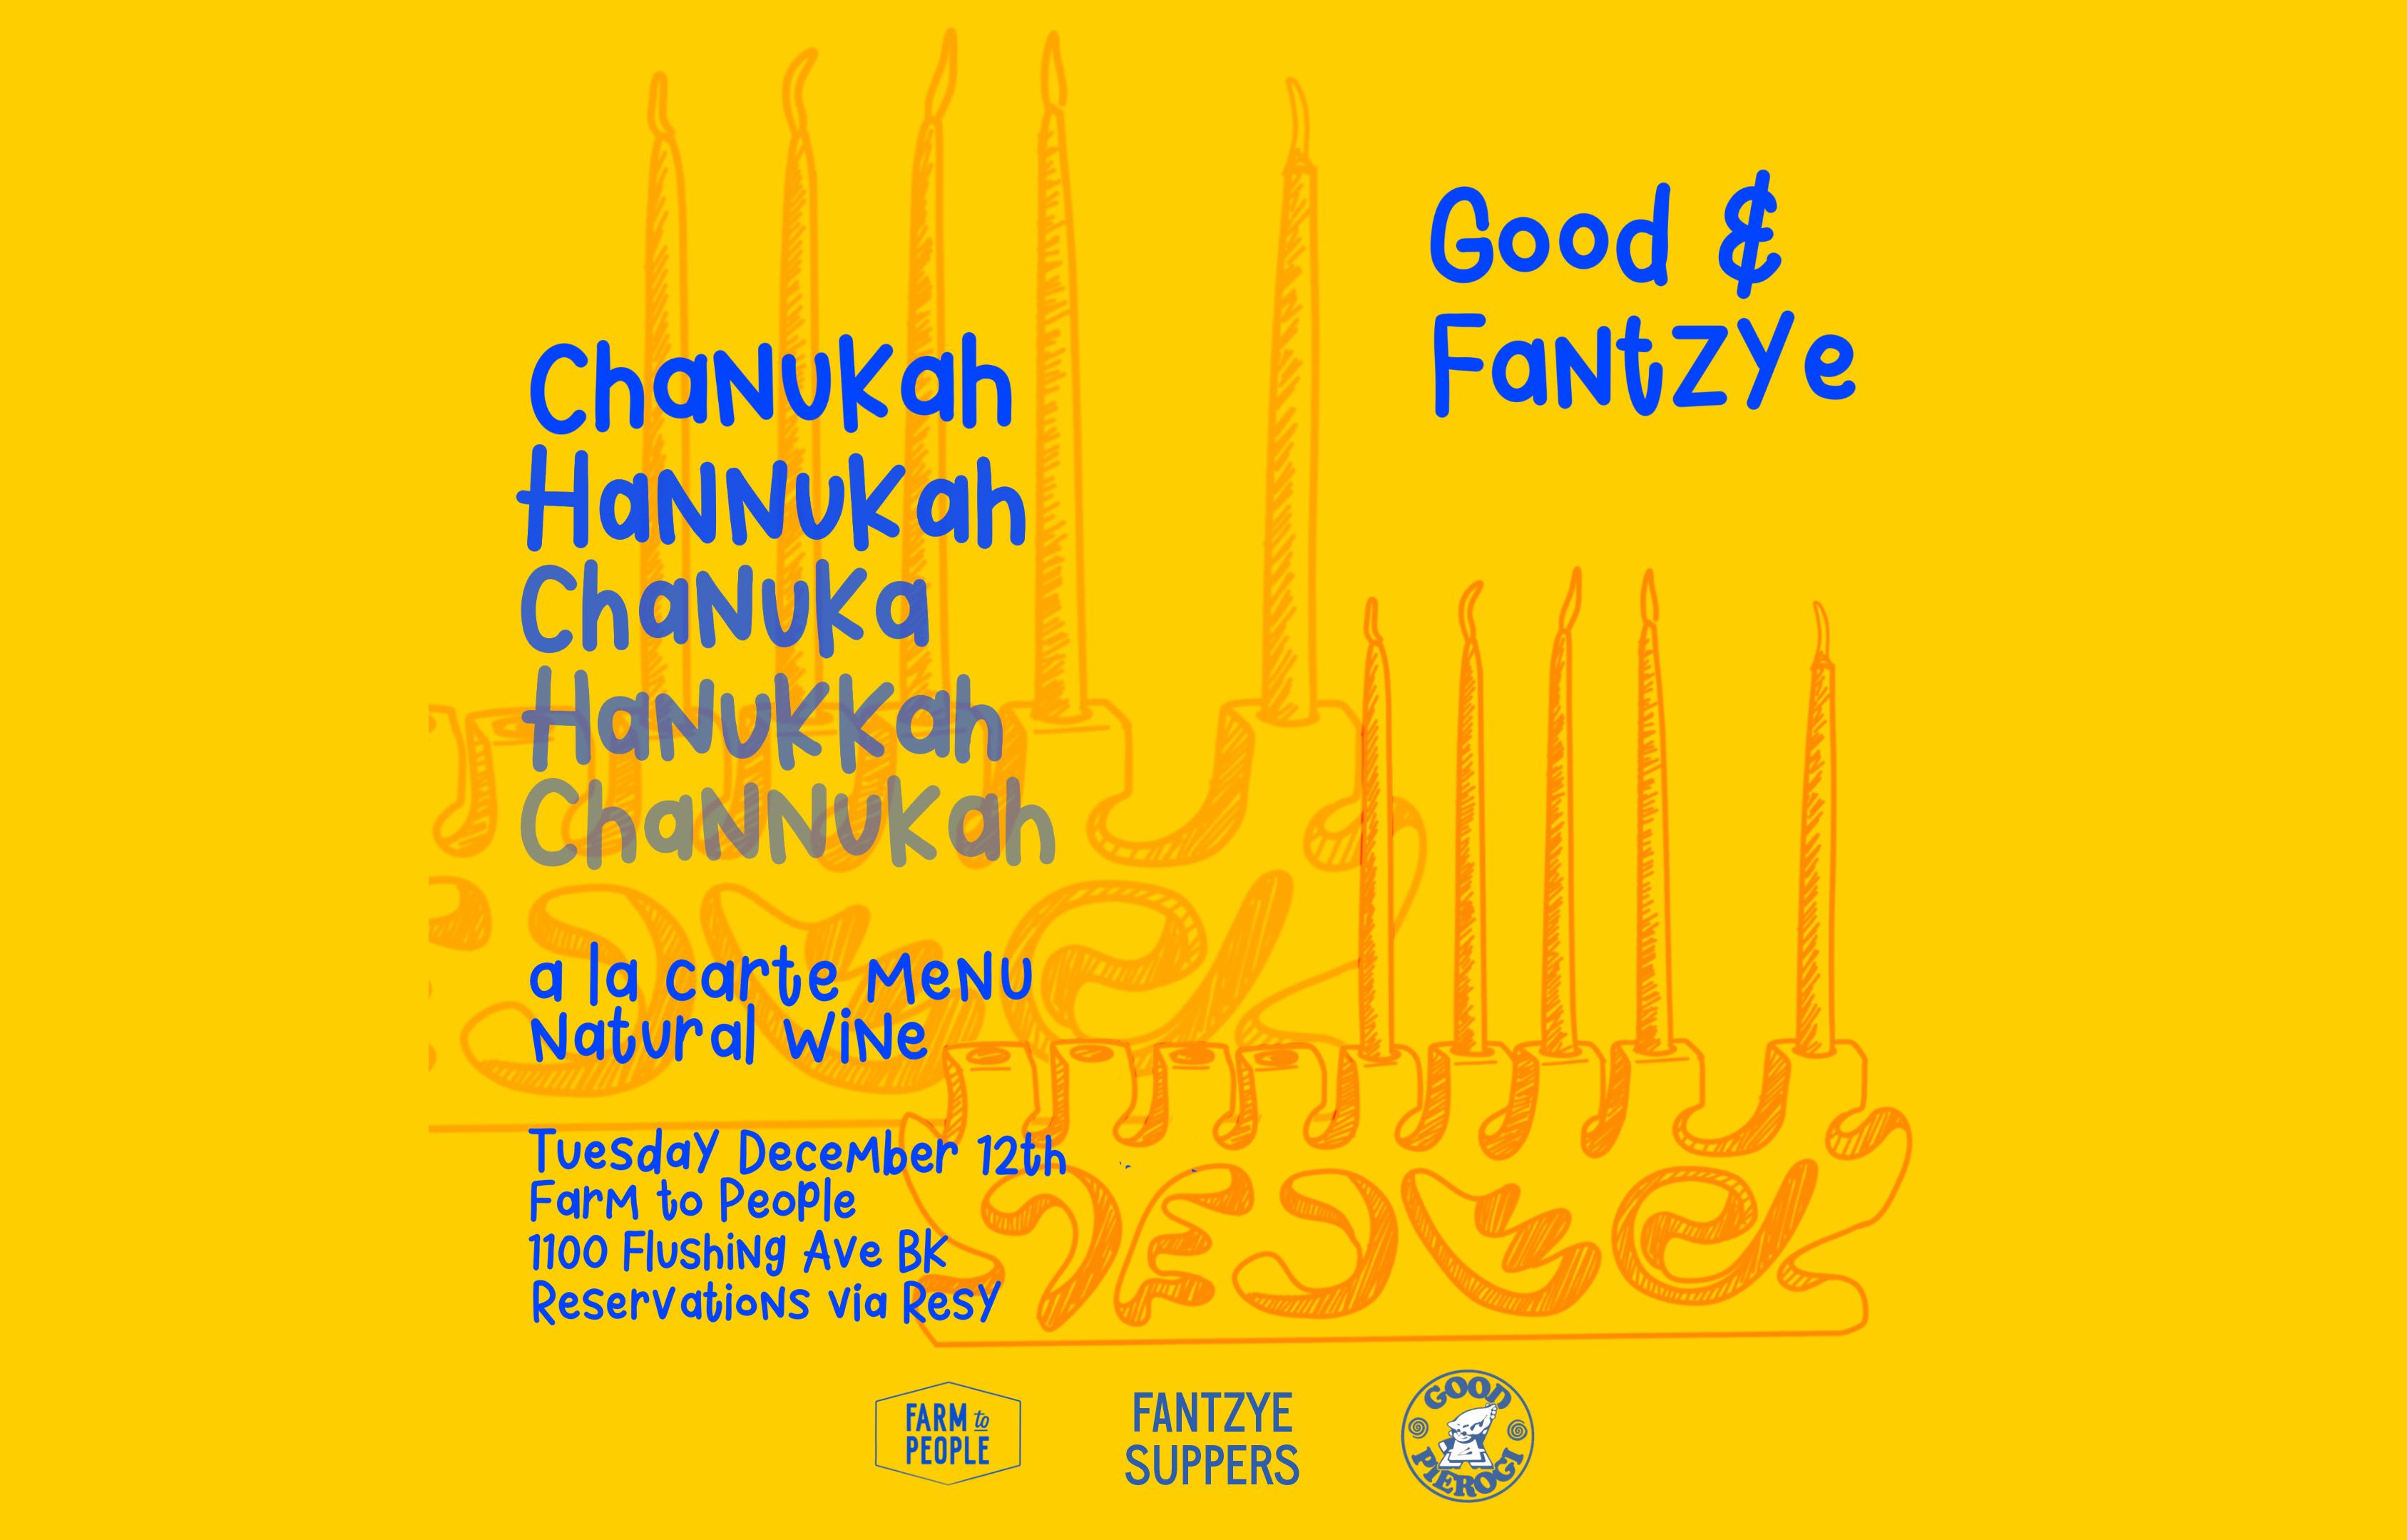 Good & Fantzye Hannukah